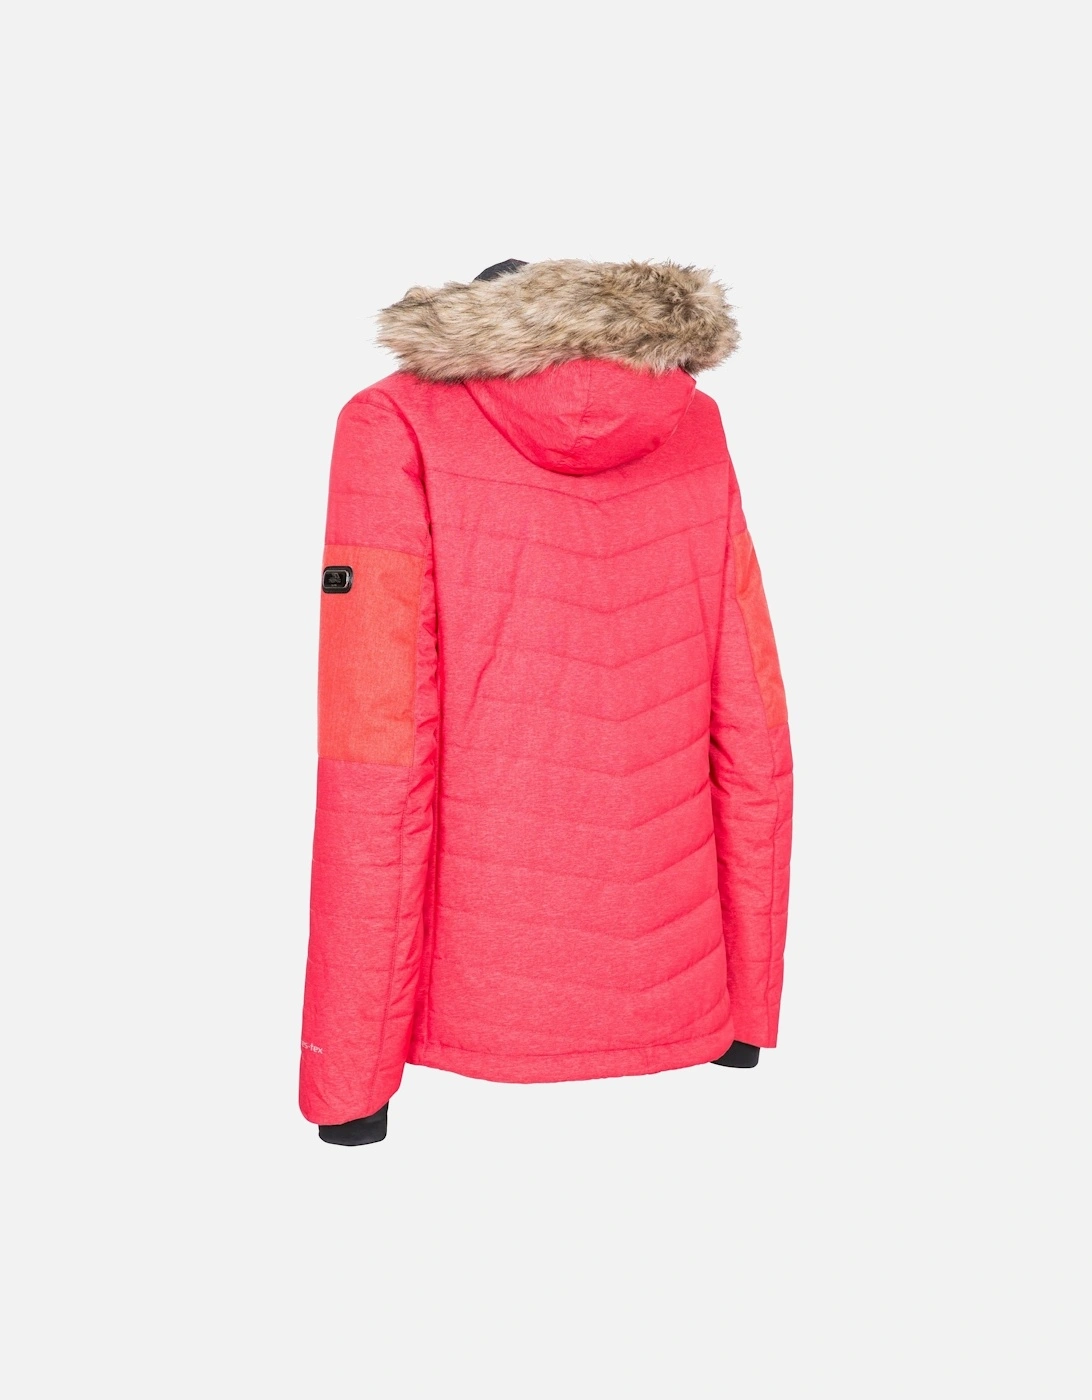 Womens/Ladies Tiffany Ski Jacket